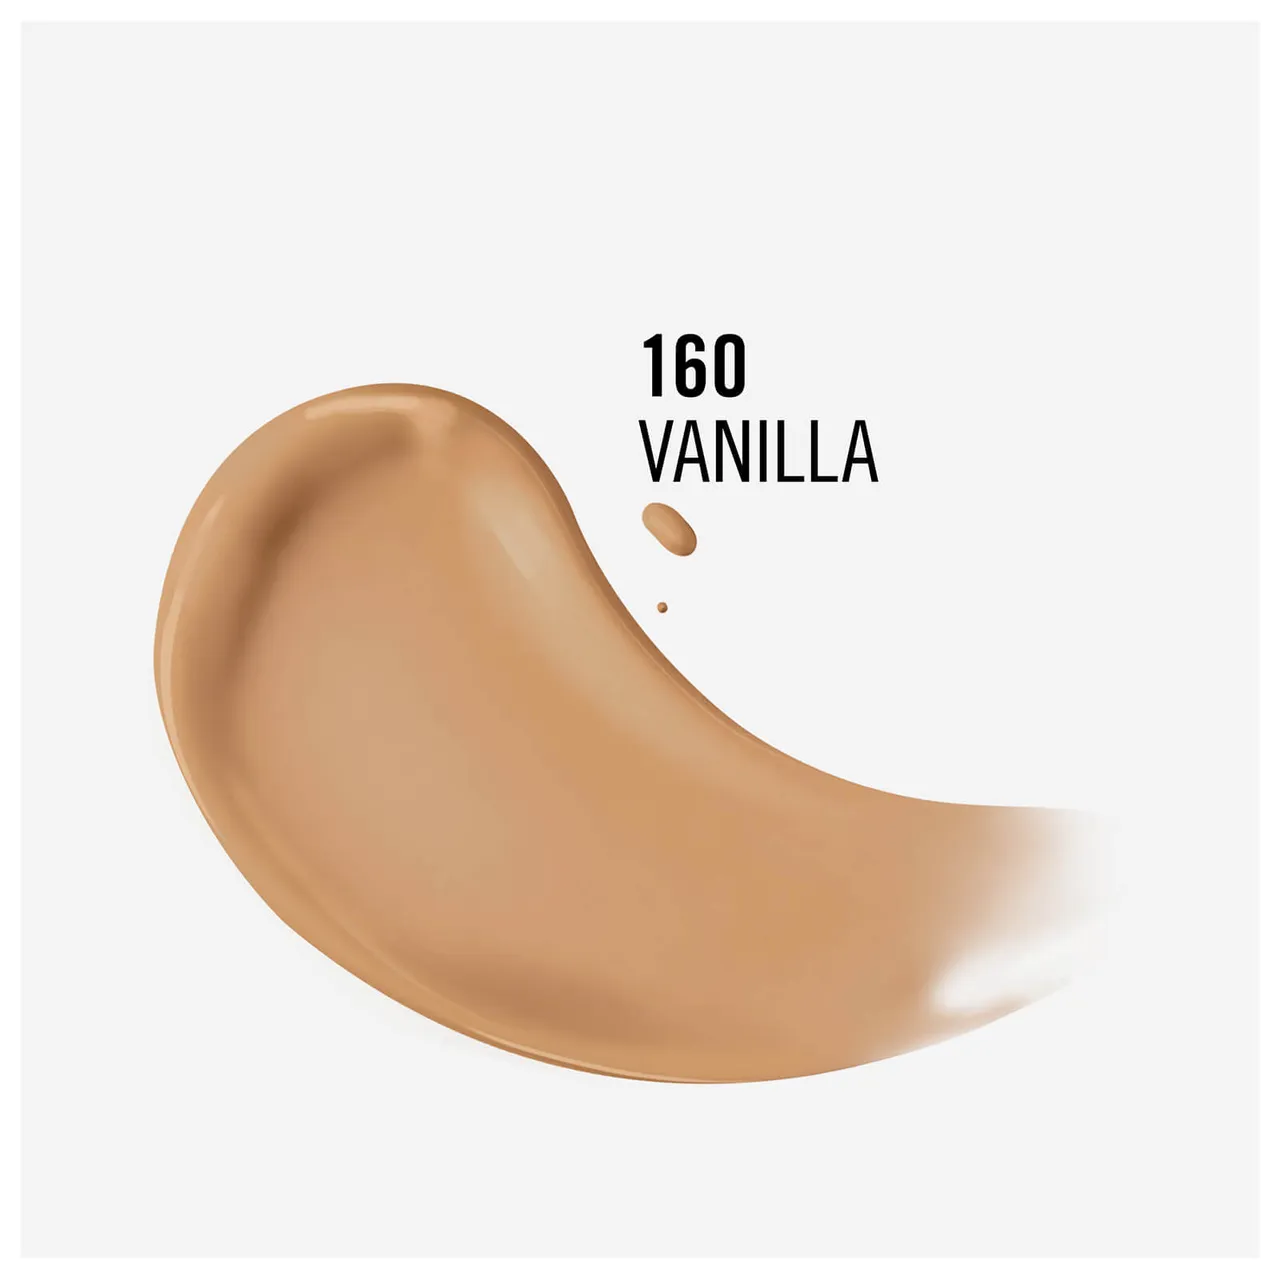 Rimmel Kind and Free Skin Tint Moisturising Foundation 30ml (Various Shades) - Vanilla